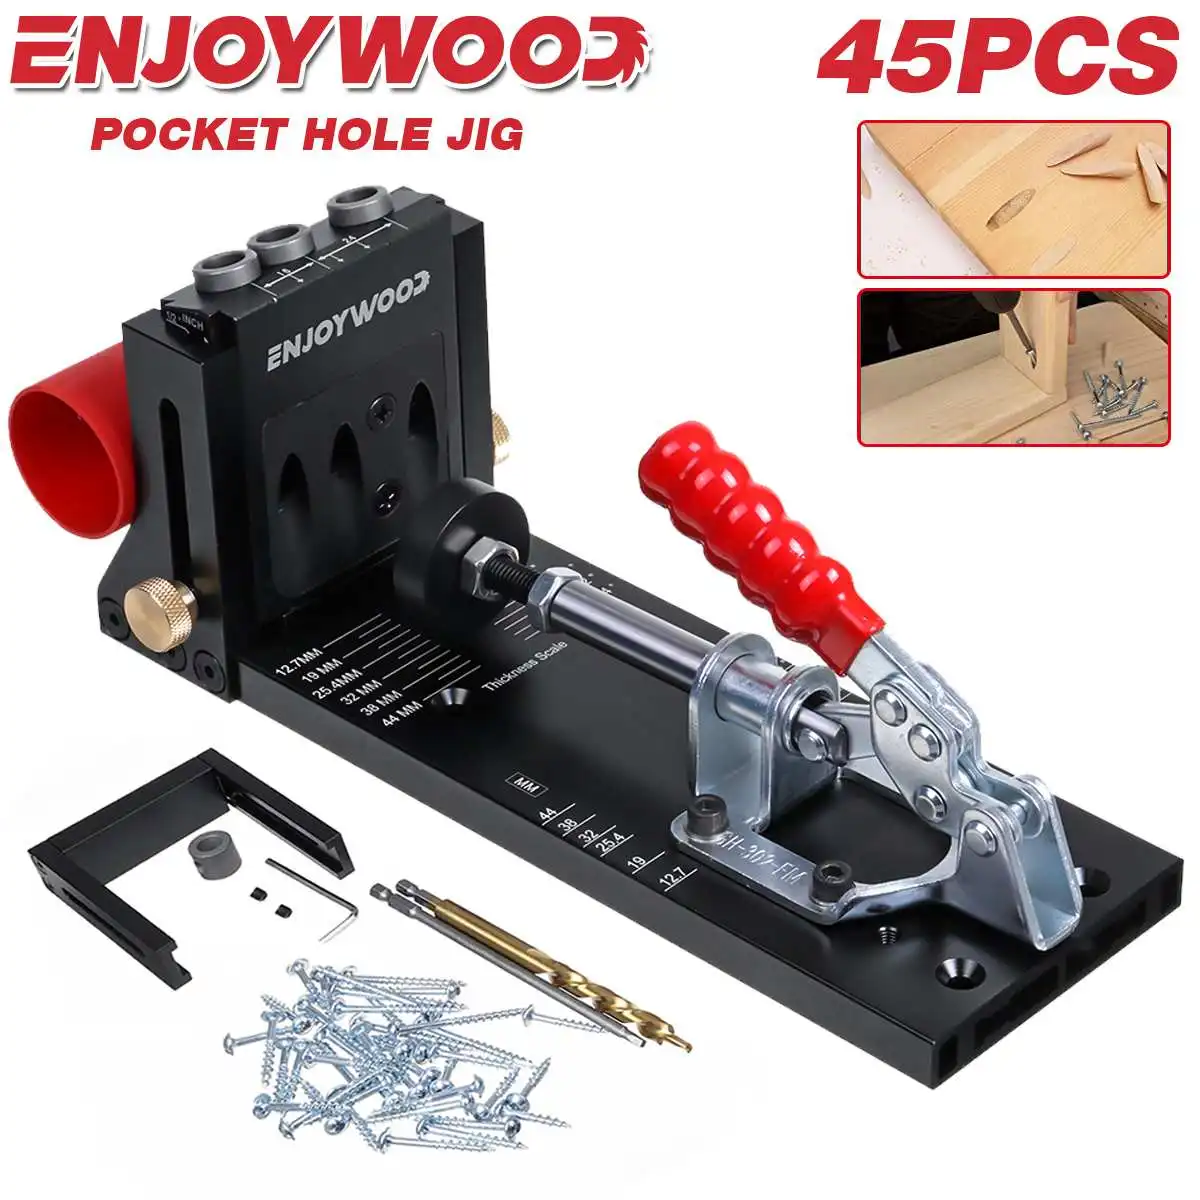 ENJOYWOOD 45Pcs 9.5mm 3-Hole Pocket Hole Jig Kit Aluminum Alloy Adjustable Woodworking Drilling Guide For Angled Holes Drill Bit